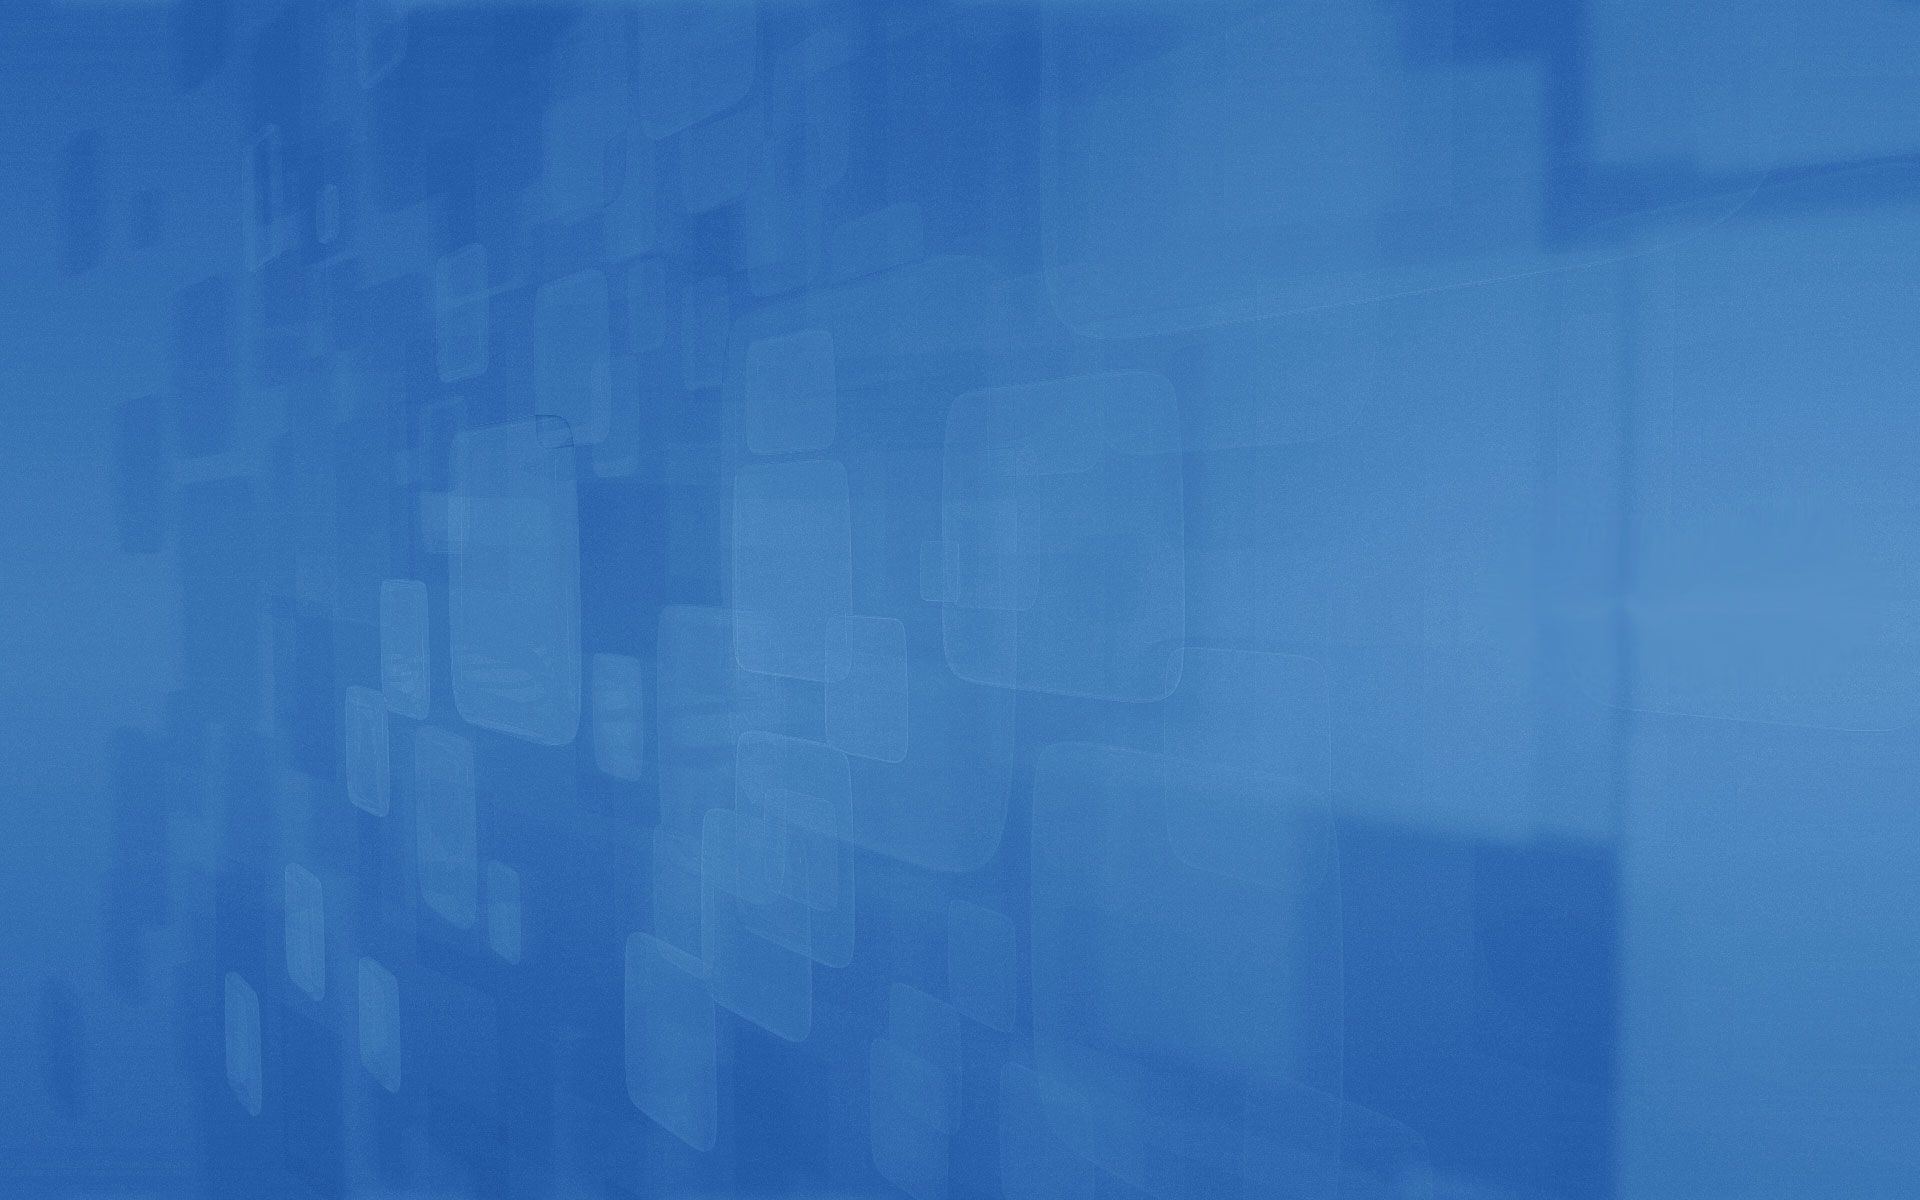 COMPAQ light blue desktop PC and Mac wallpaper